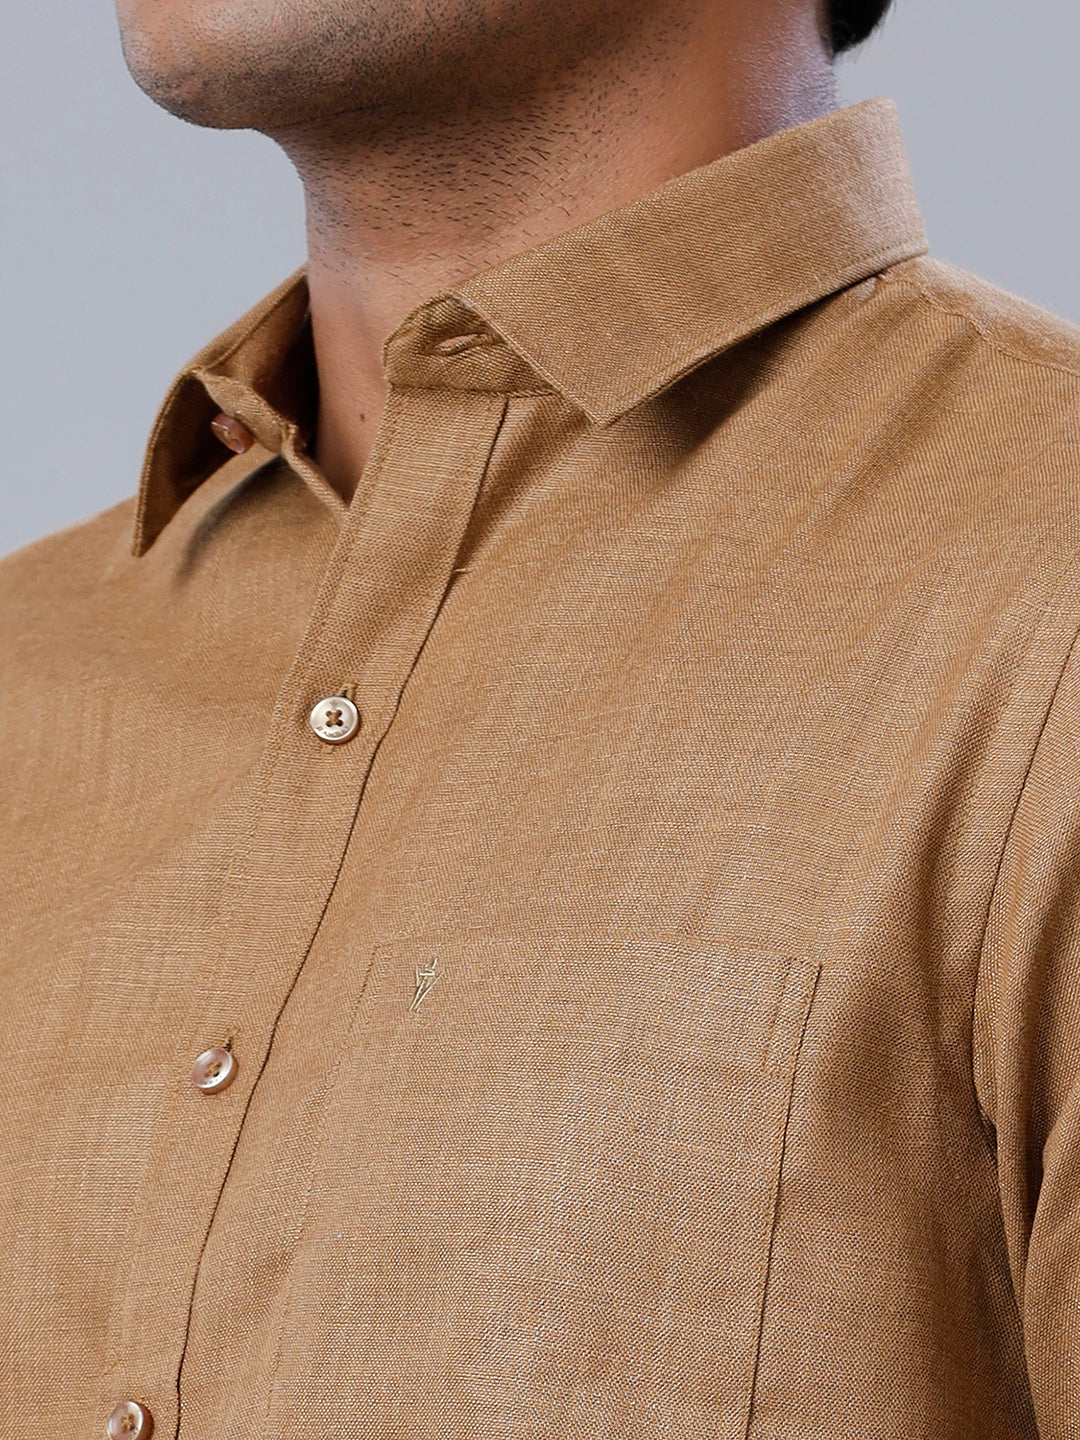 Mens Formal Shirt Full Sleeves Dark Brown T41 TQ6-Zoom view